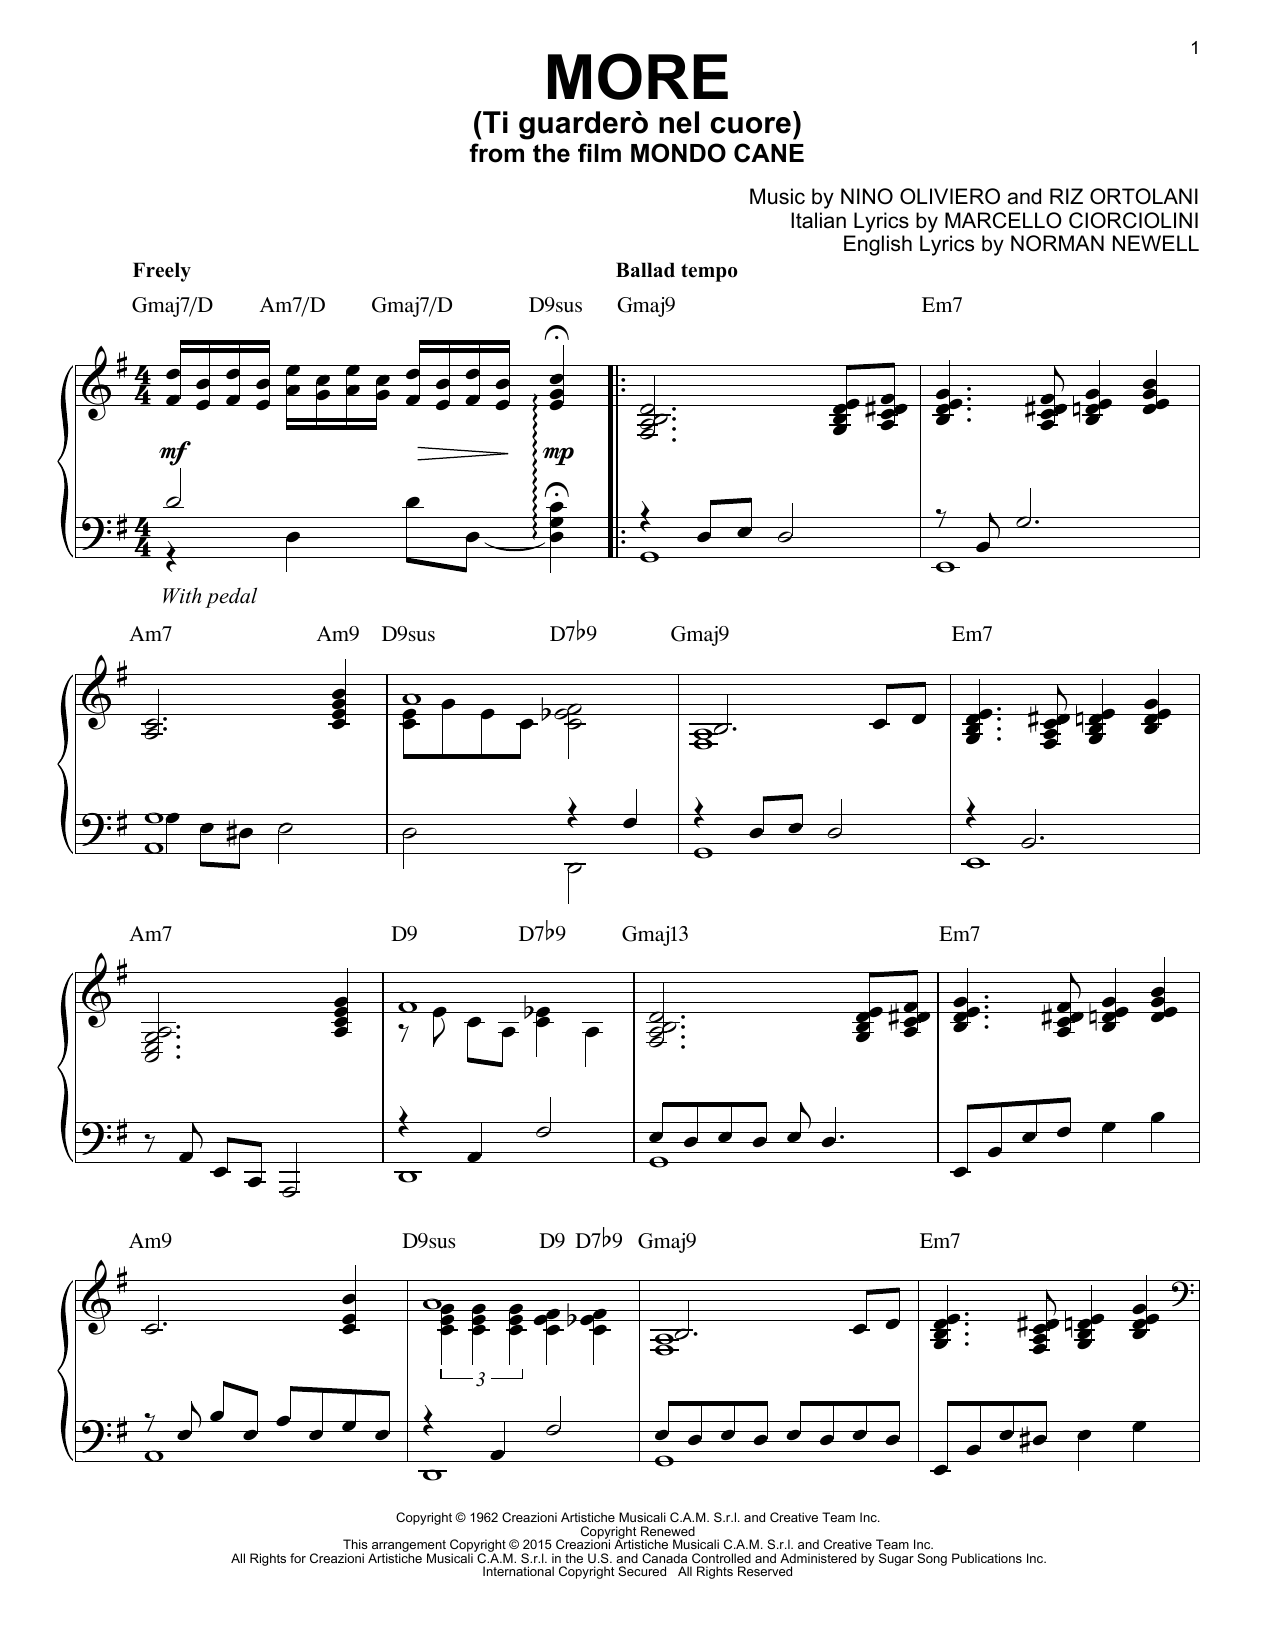 Download Riz Ortolani More (Ti Guarderò Nel Cuore) Sheet Music and learn how to play Piano PDF digital score in minutes